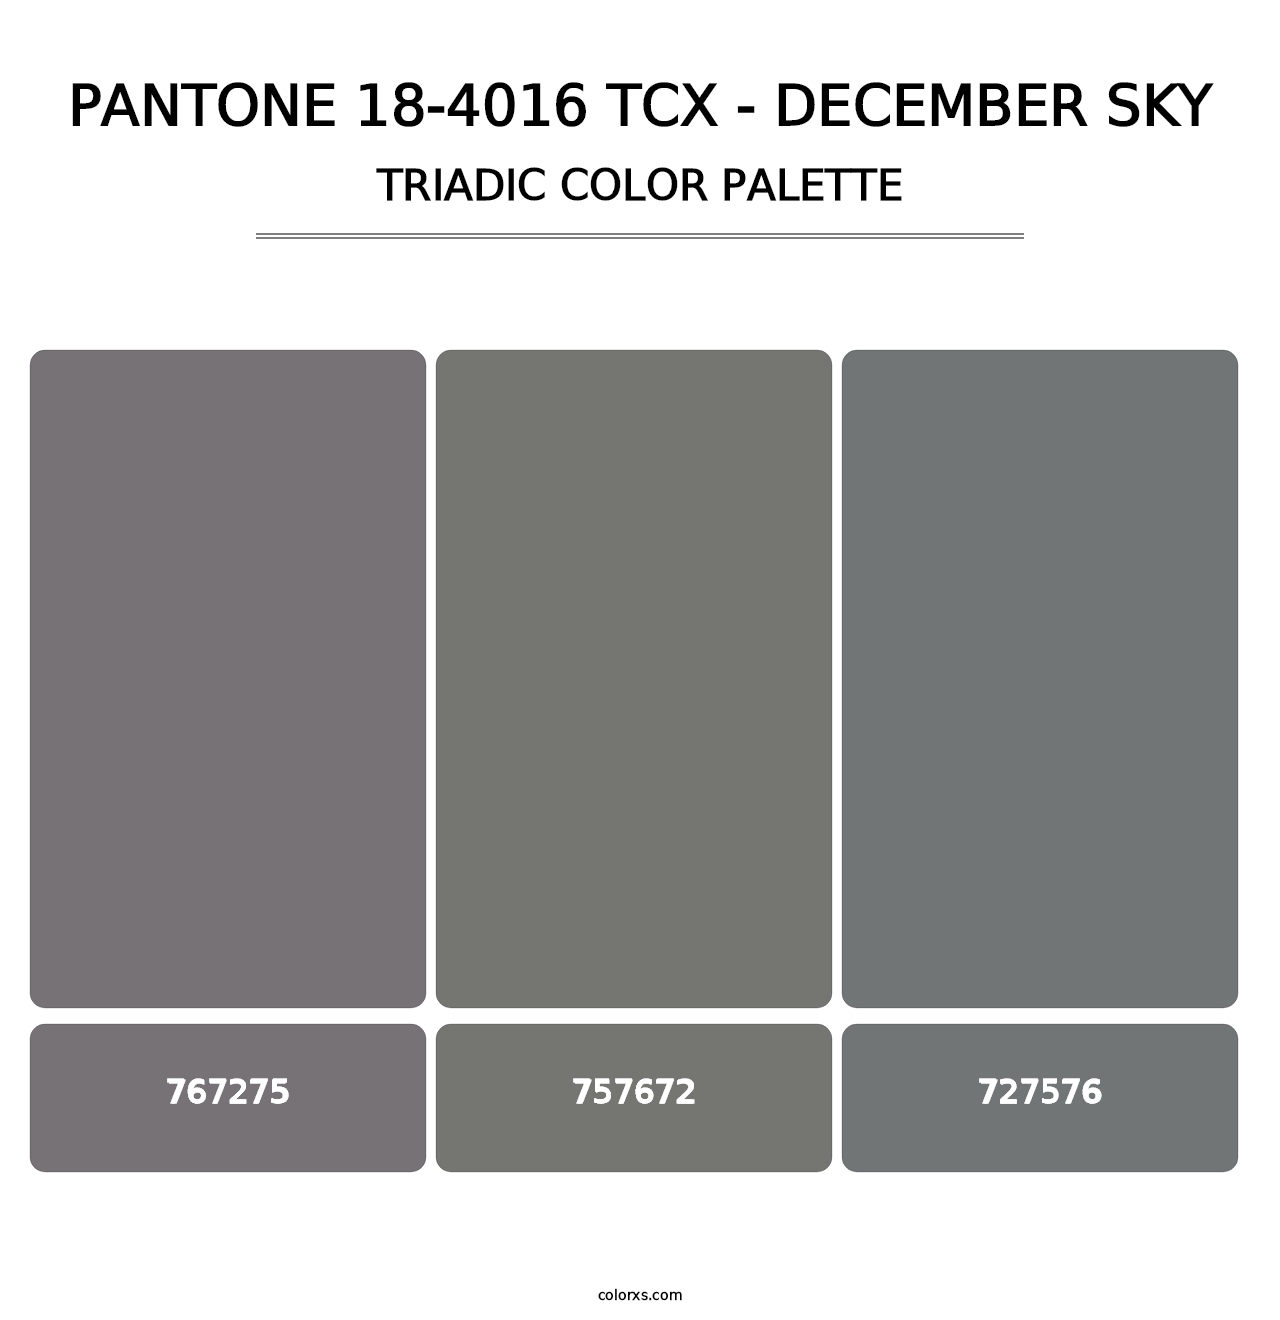 PANTONE 18-4016 TCX - December Sky - Triadic Color Palette